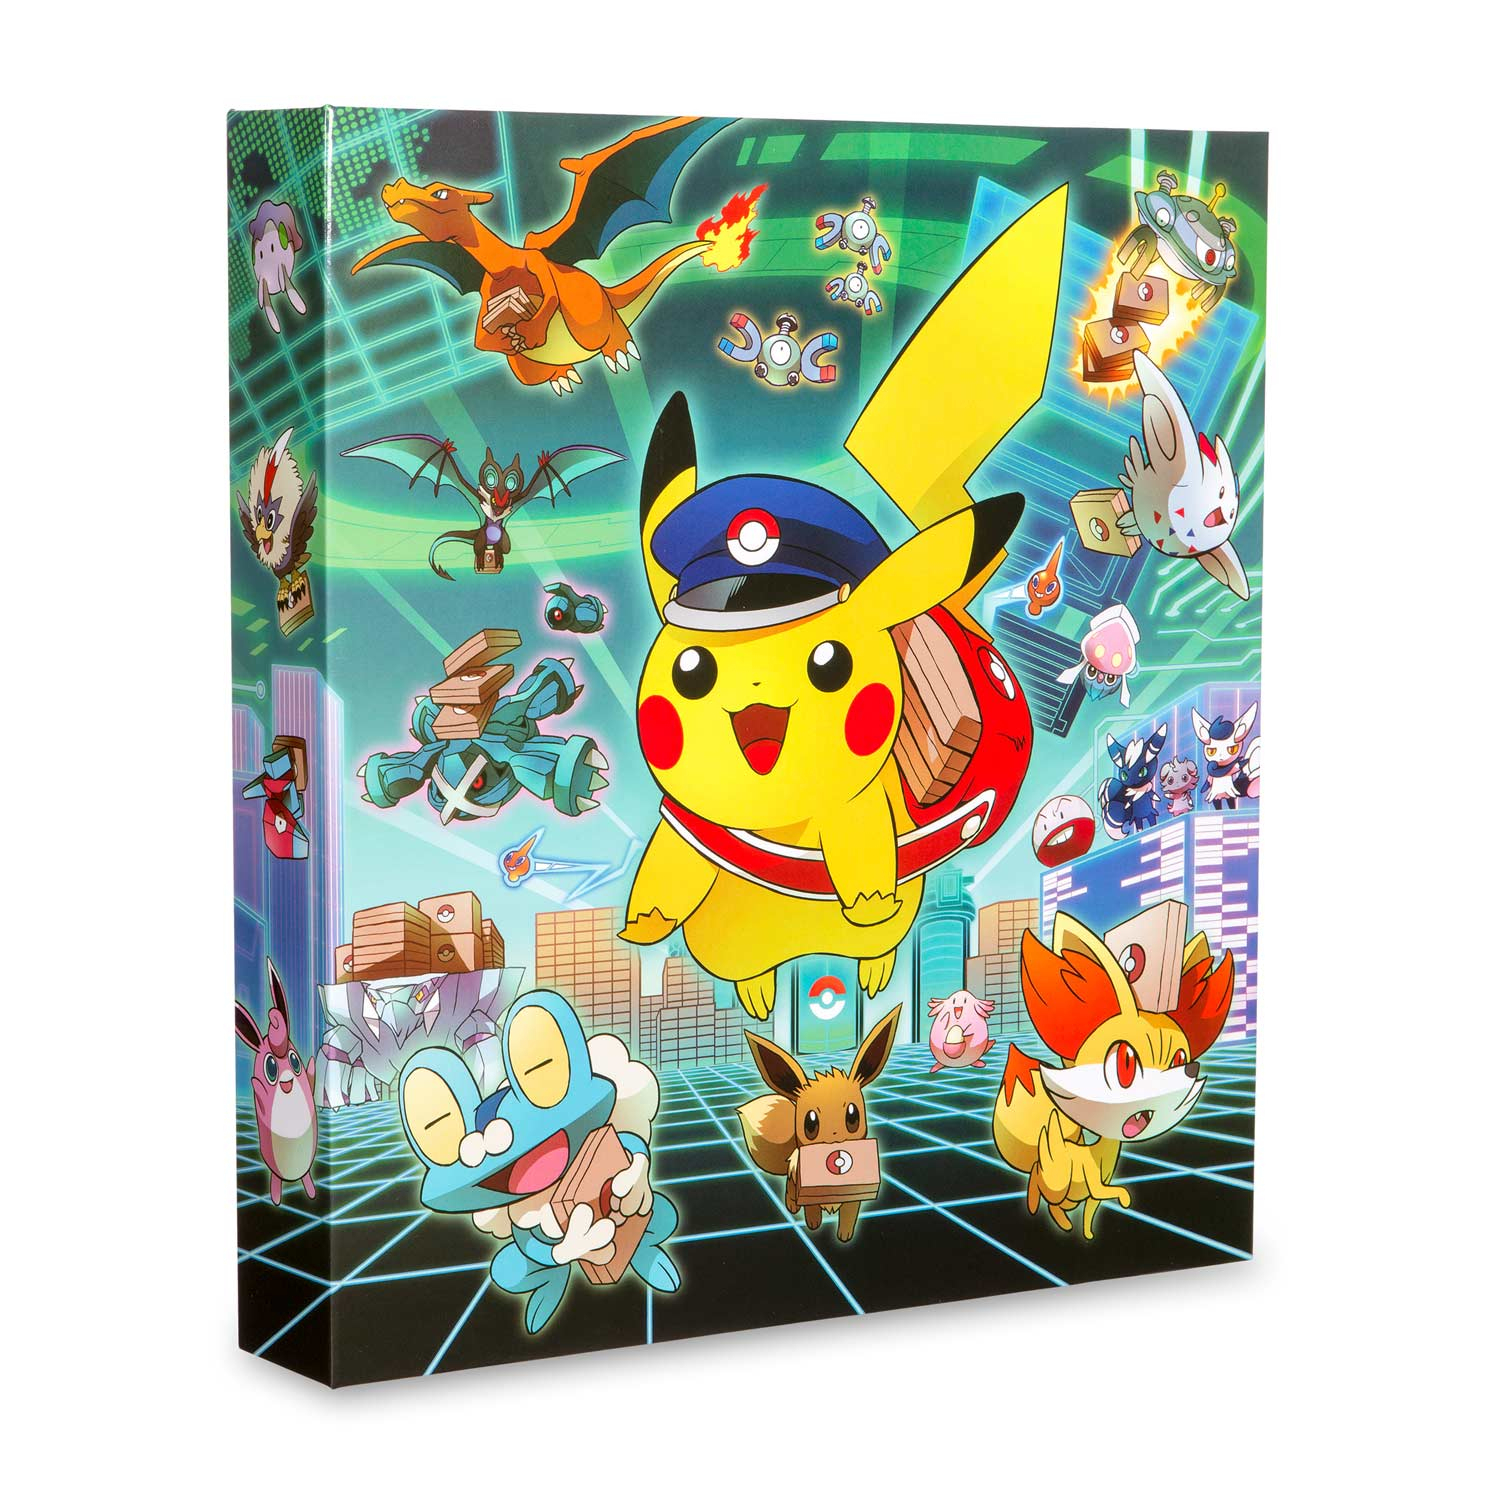 Pokemon Binder Cover Printable Free Free Printable